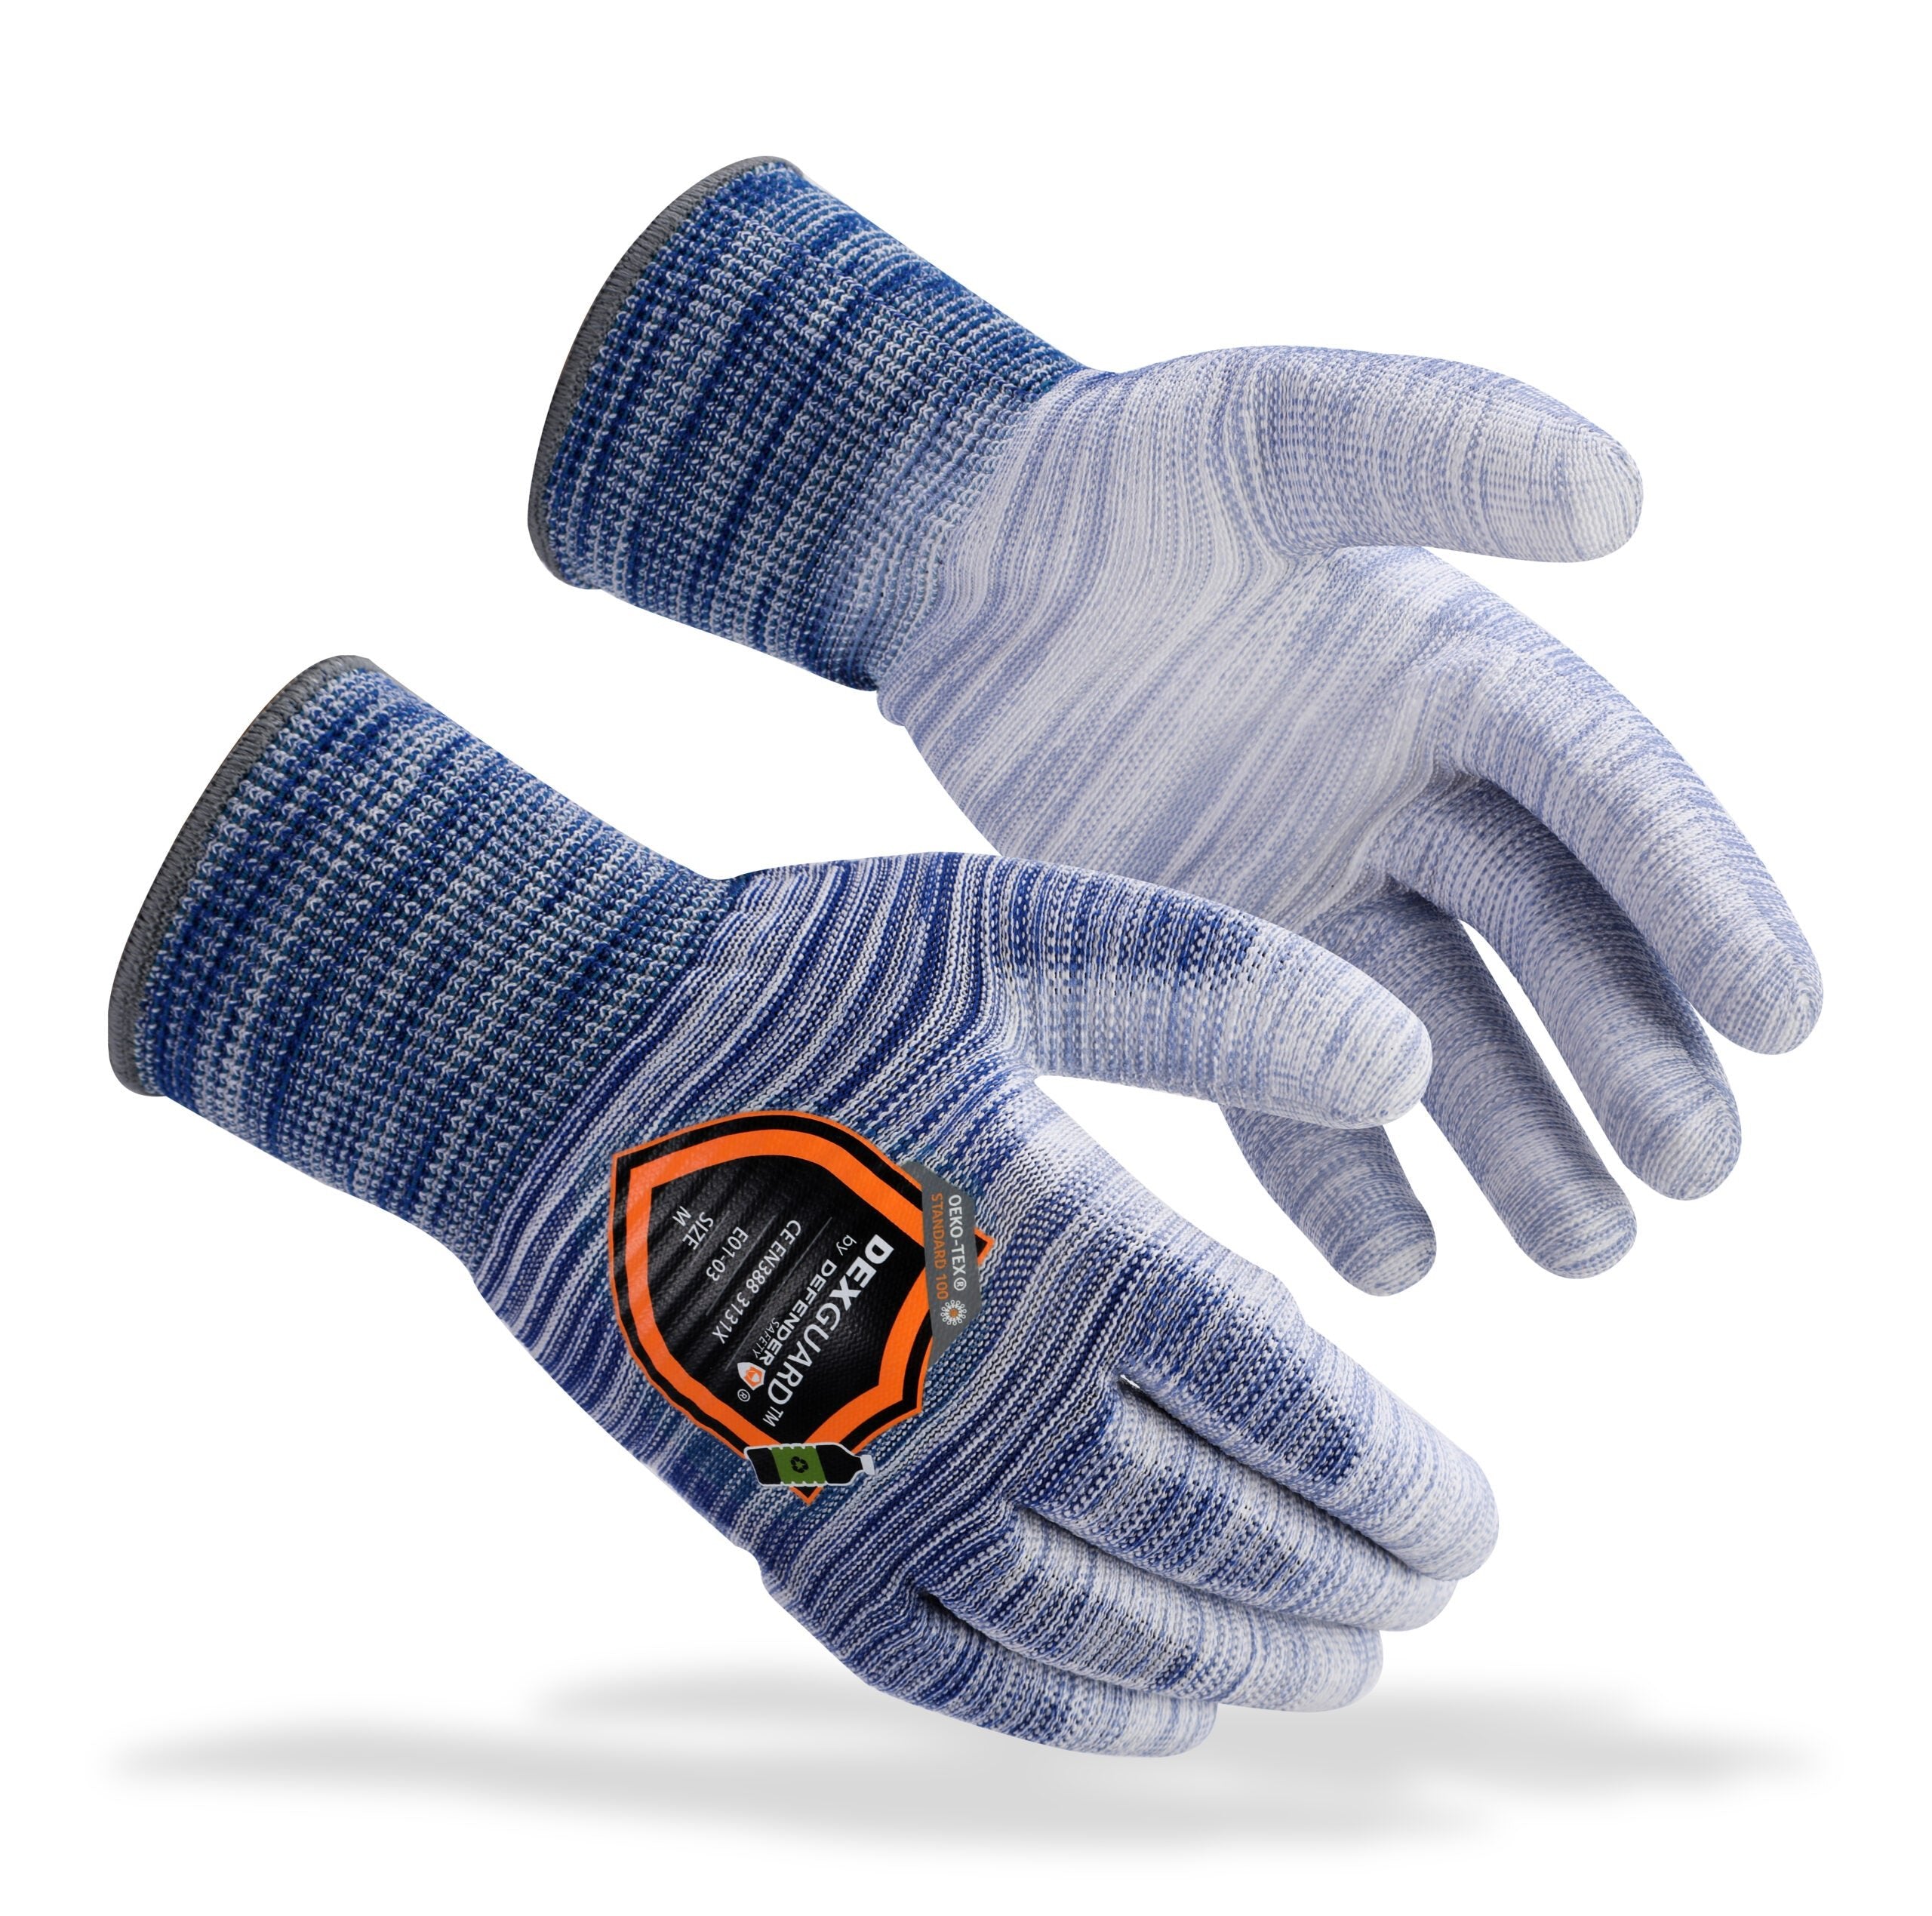 DEXGUARD™ 13G Recycled Polyester Knit Liner, Rainbow Blue Gloves, Abrasion Resistant Level 3, Polyurethane Coating - Defender Safety